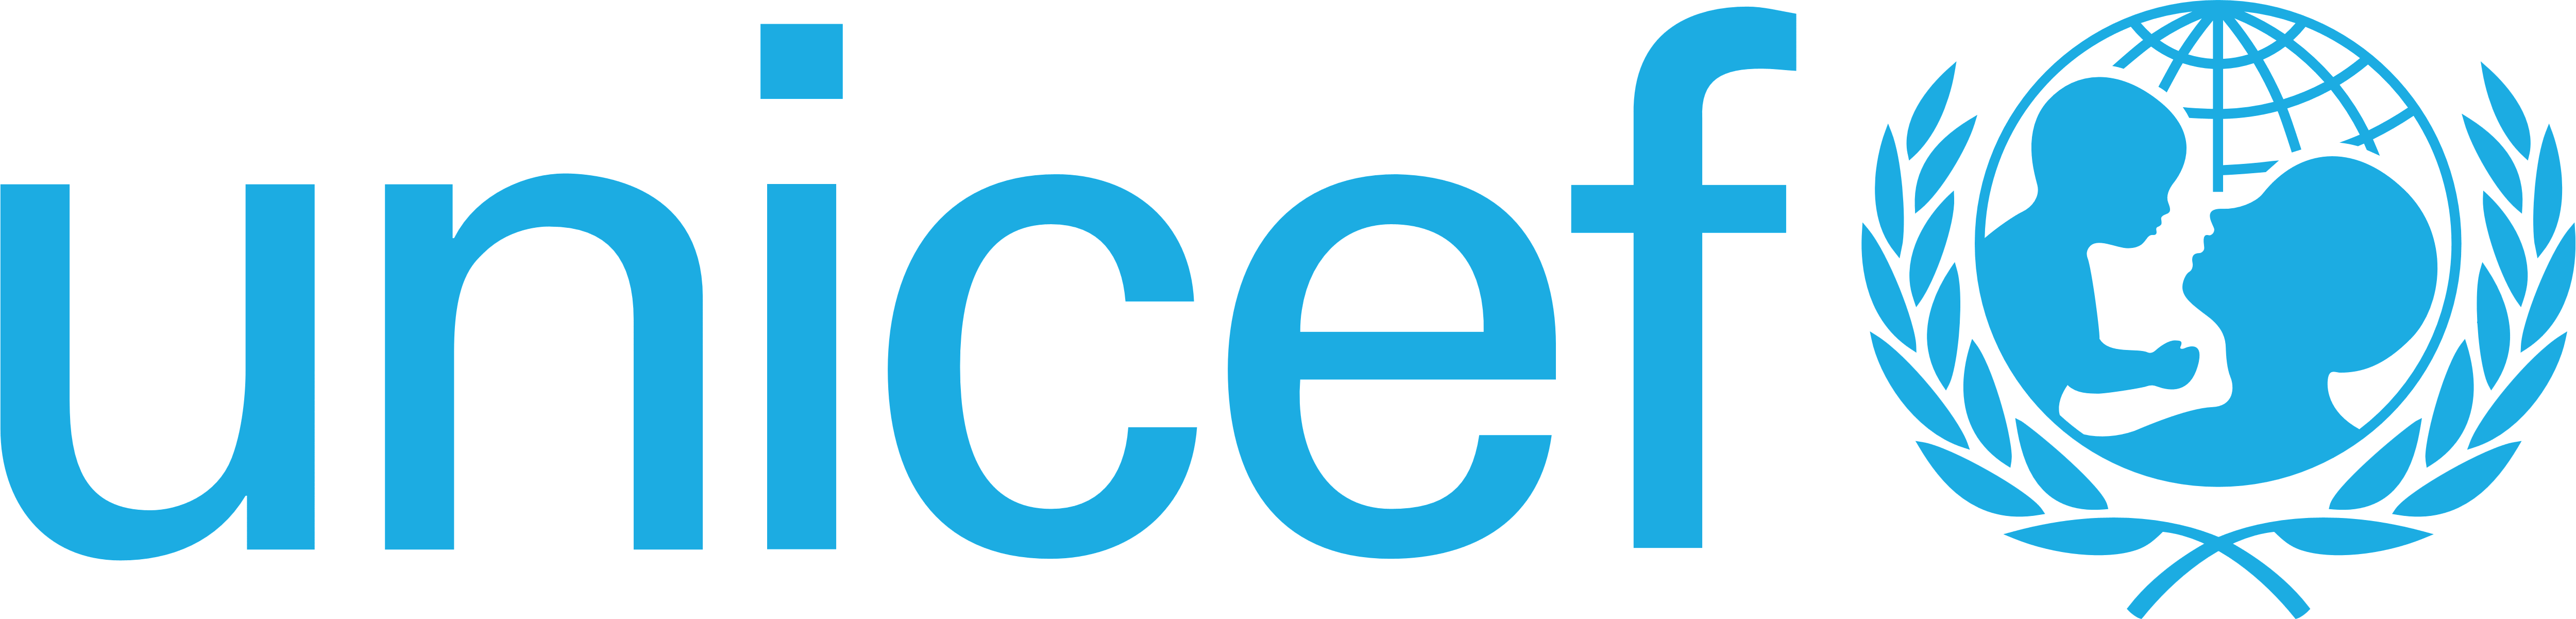 Unicef_logo.png